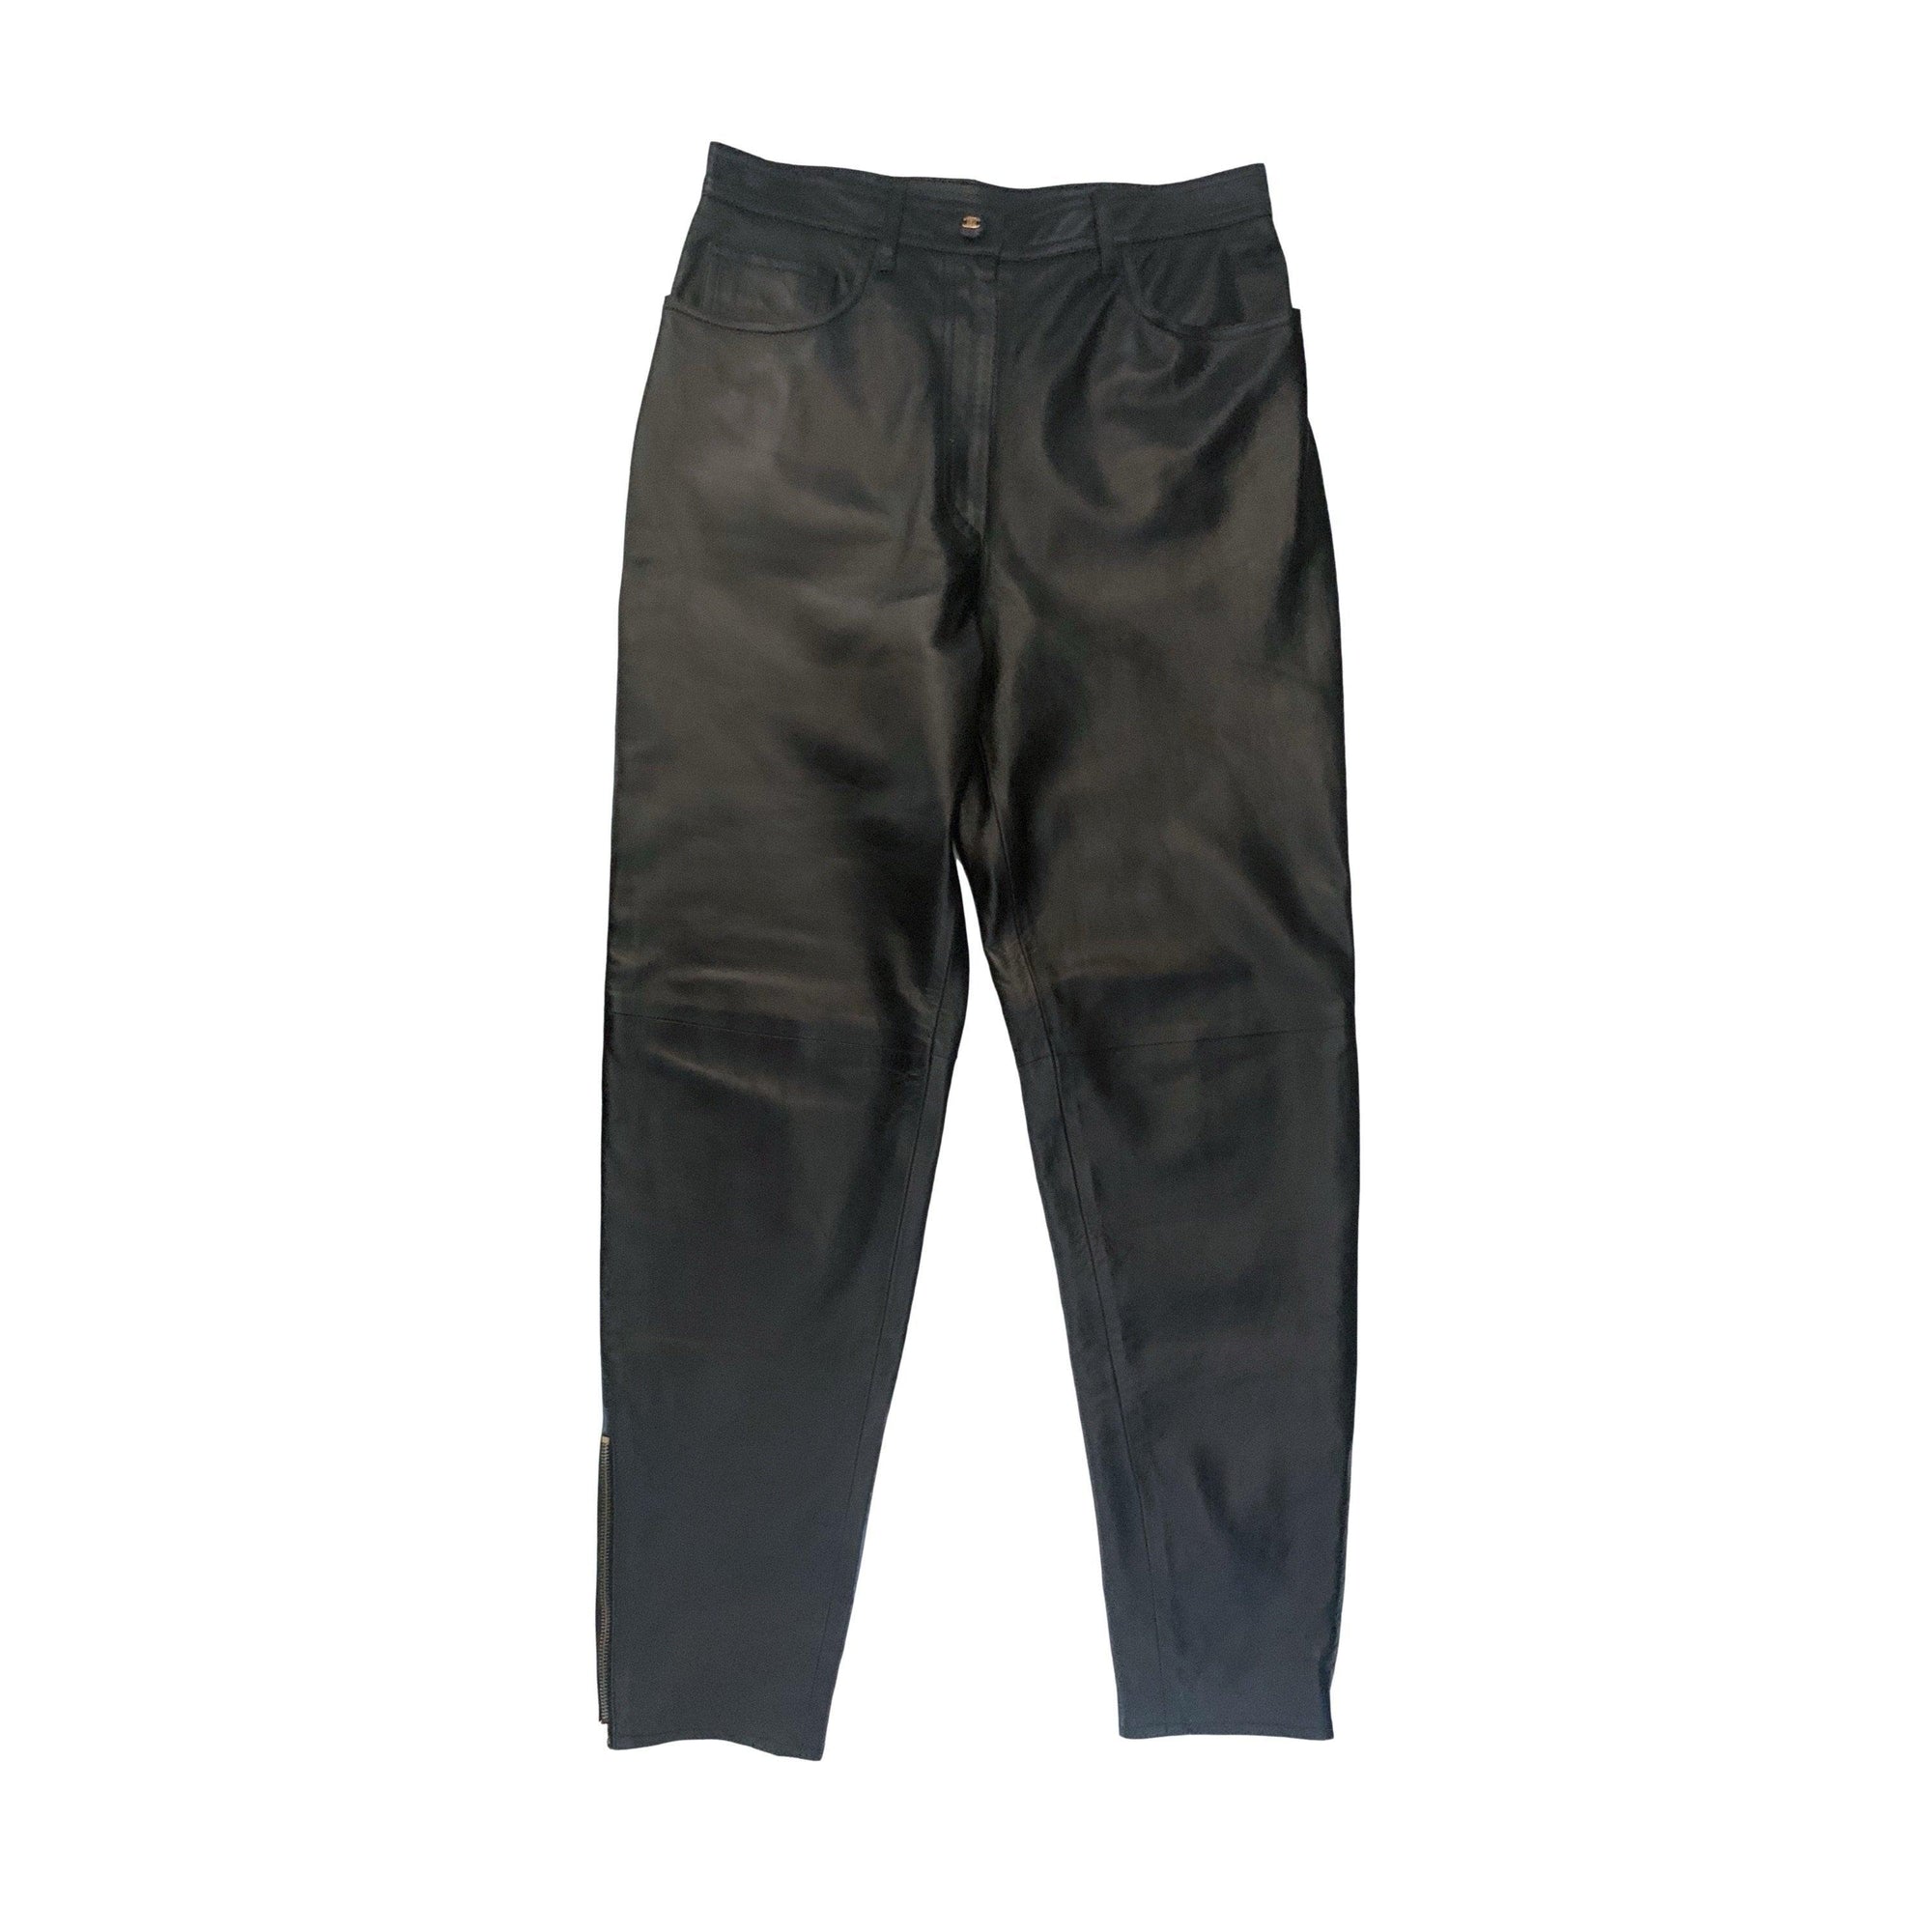 Chanel Black Leather Pants - Apparel